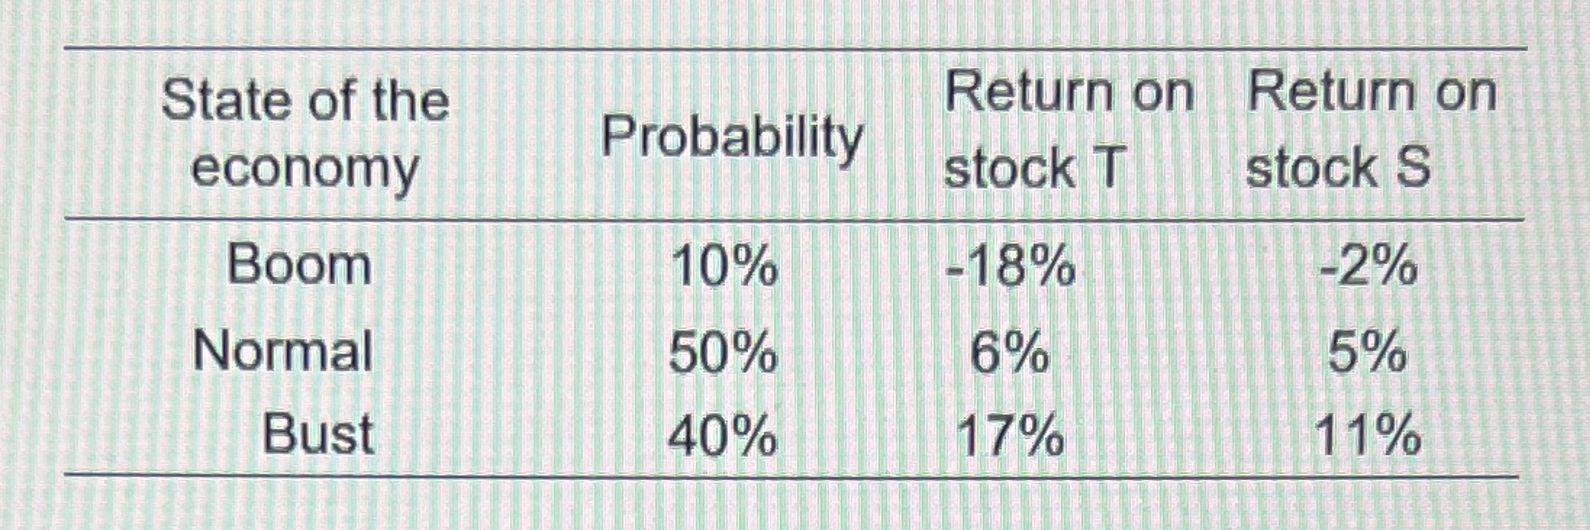 begin{tabular}{c|ccc} hline State of the economy & Probability & Return on stock ( T ) & Return on stock ( S )  hlin